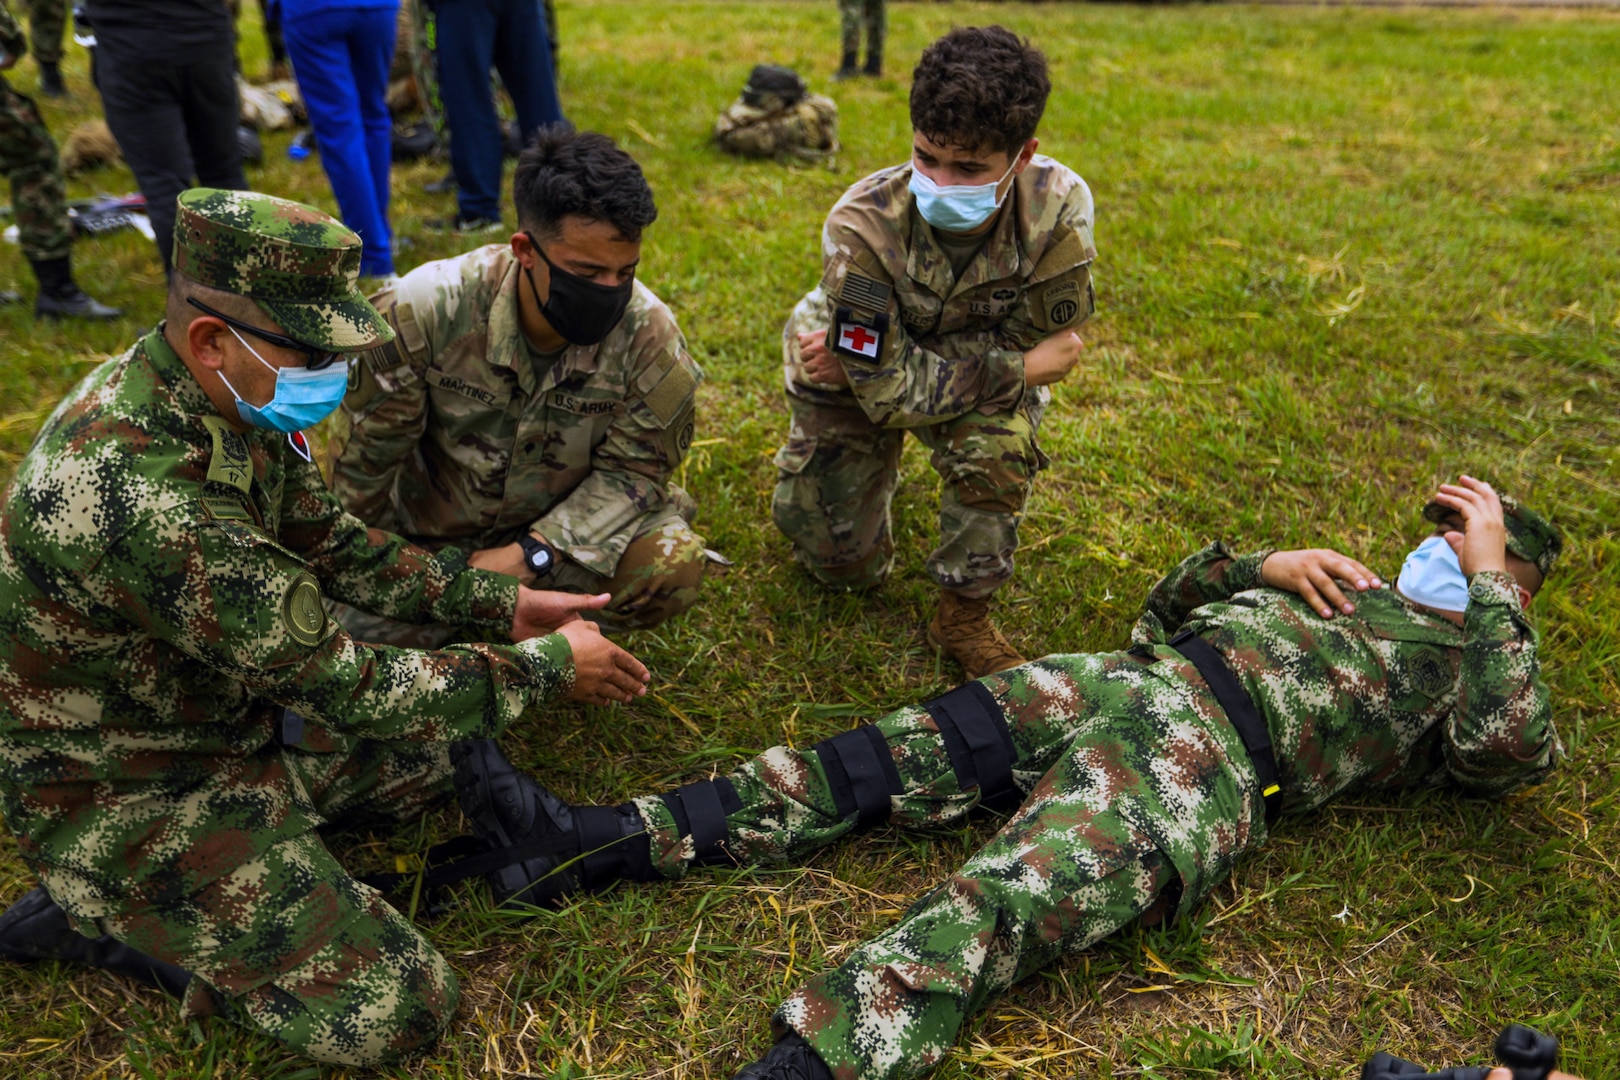 TOLEMAIDA AIR BASE, Colombia medical evacuation rehearsals